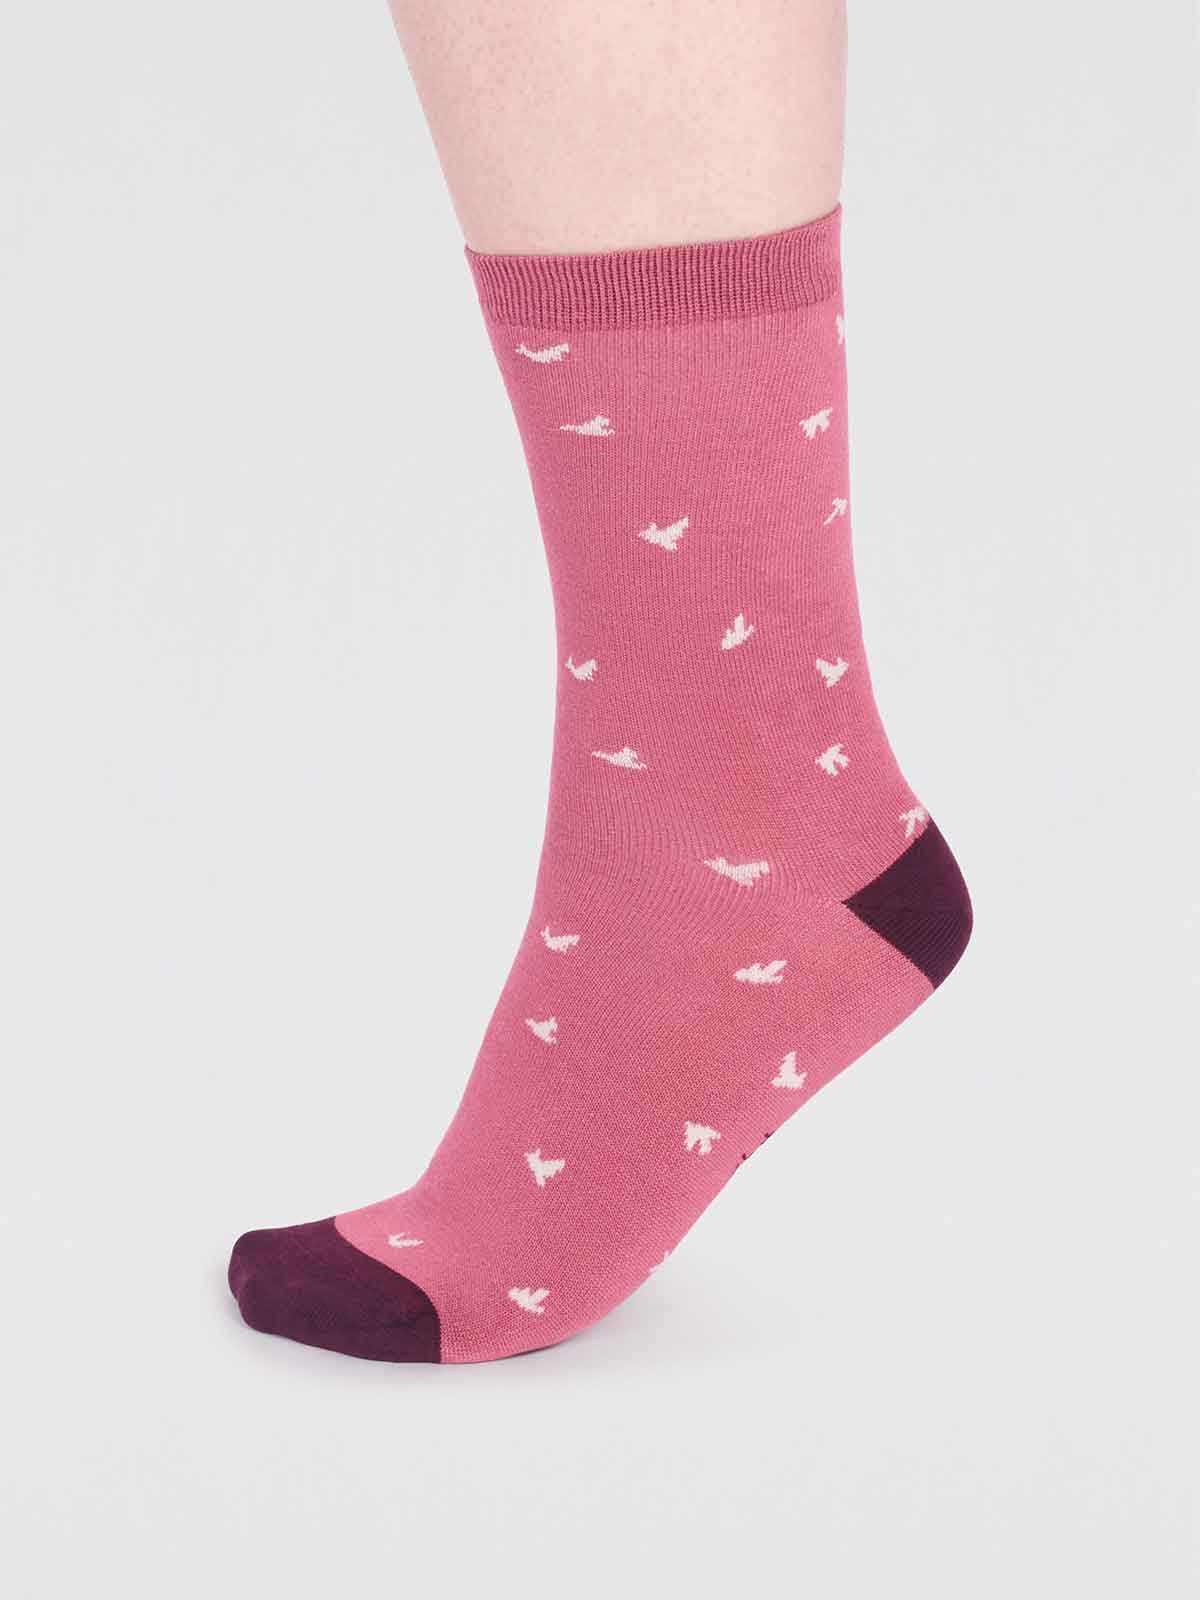 Wren Bamboo Bird Socks - Dusty Rose Pink